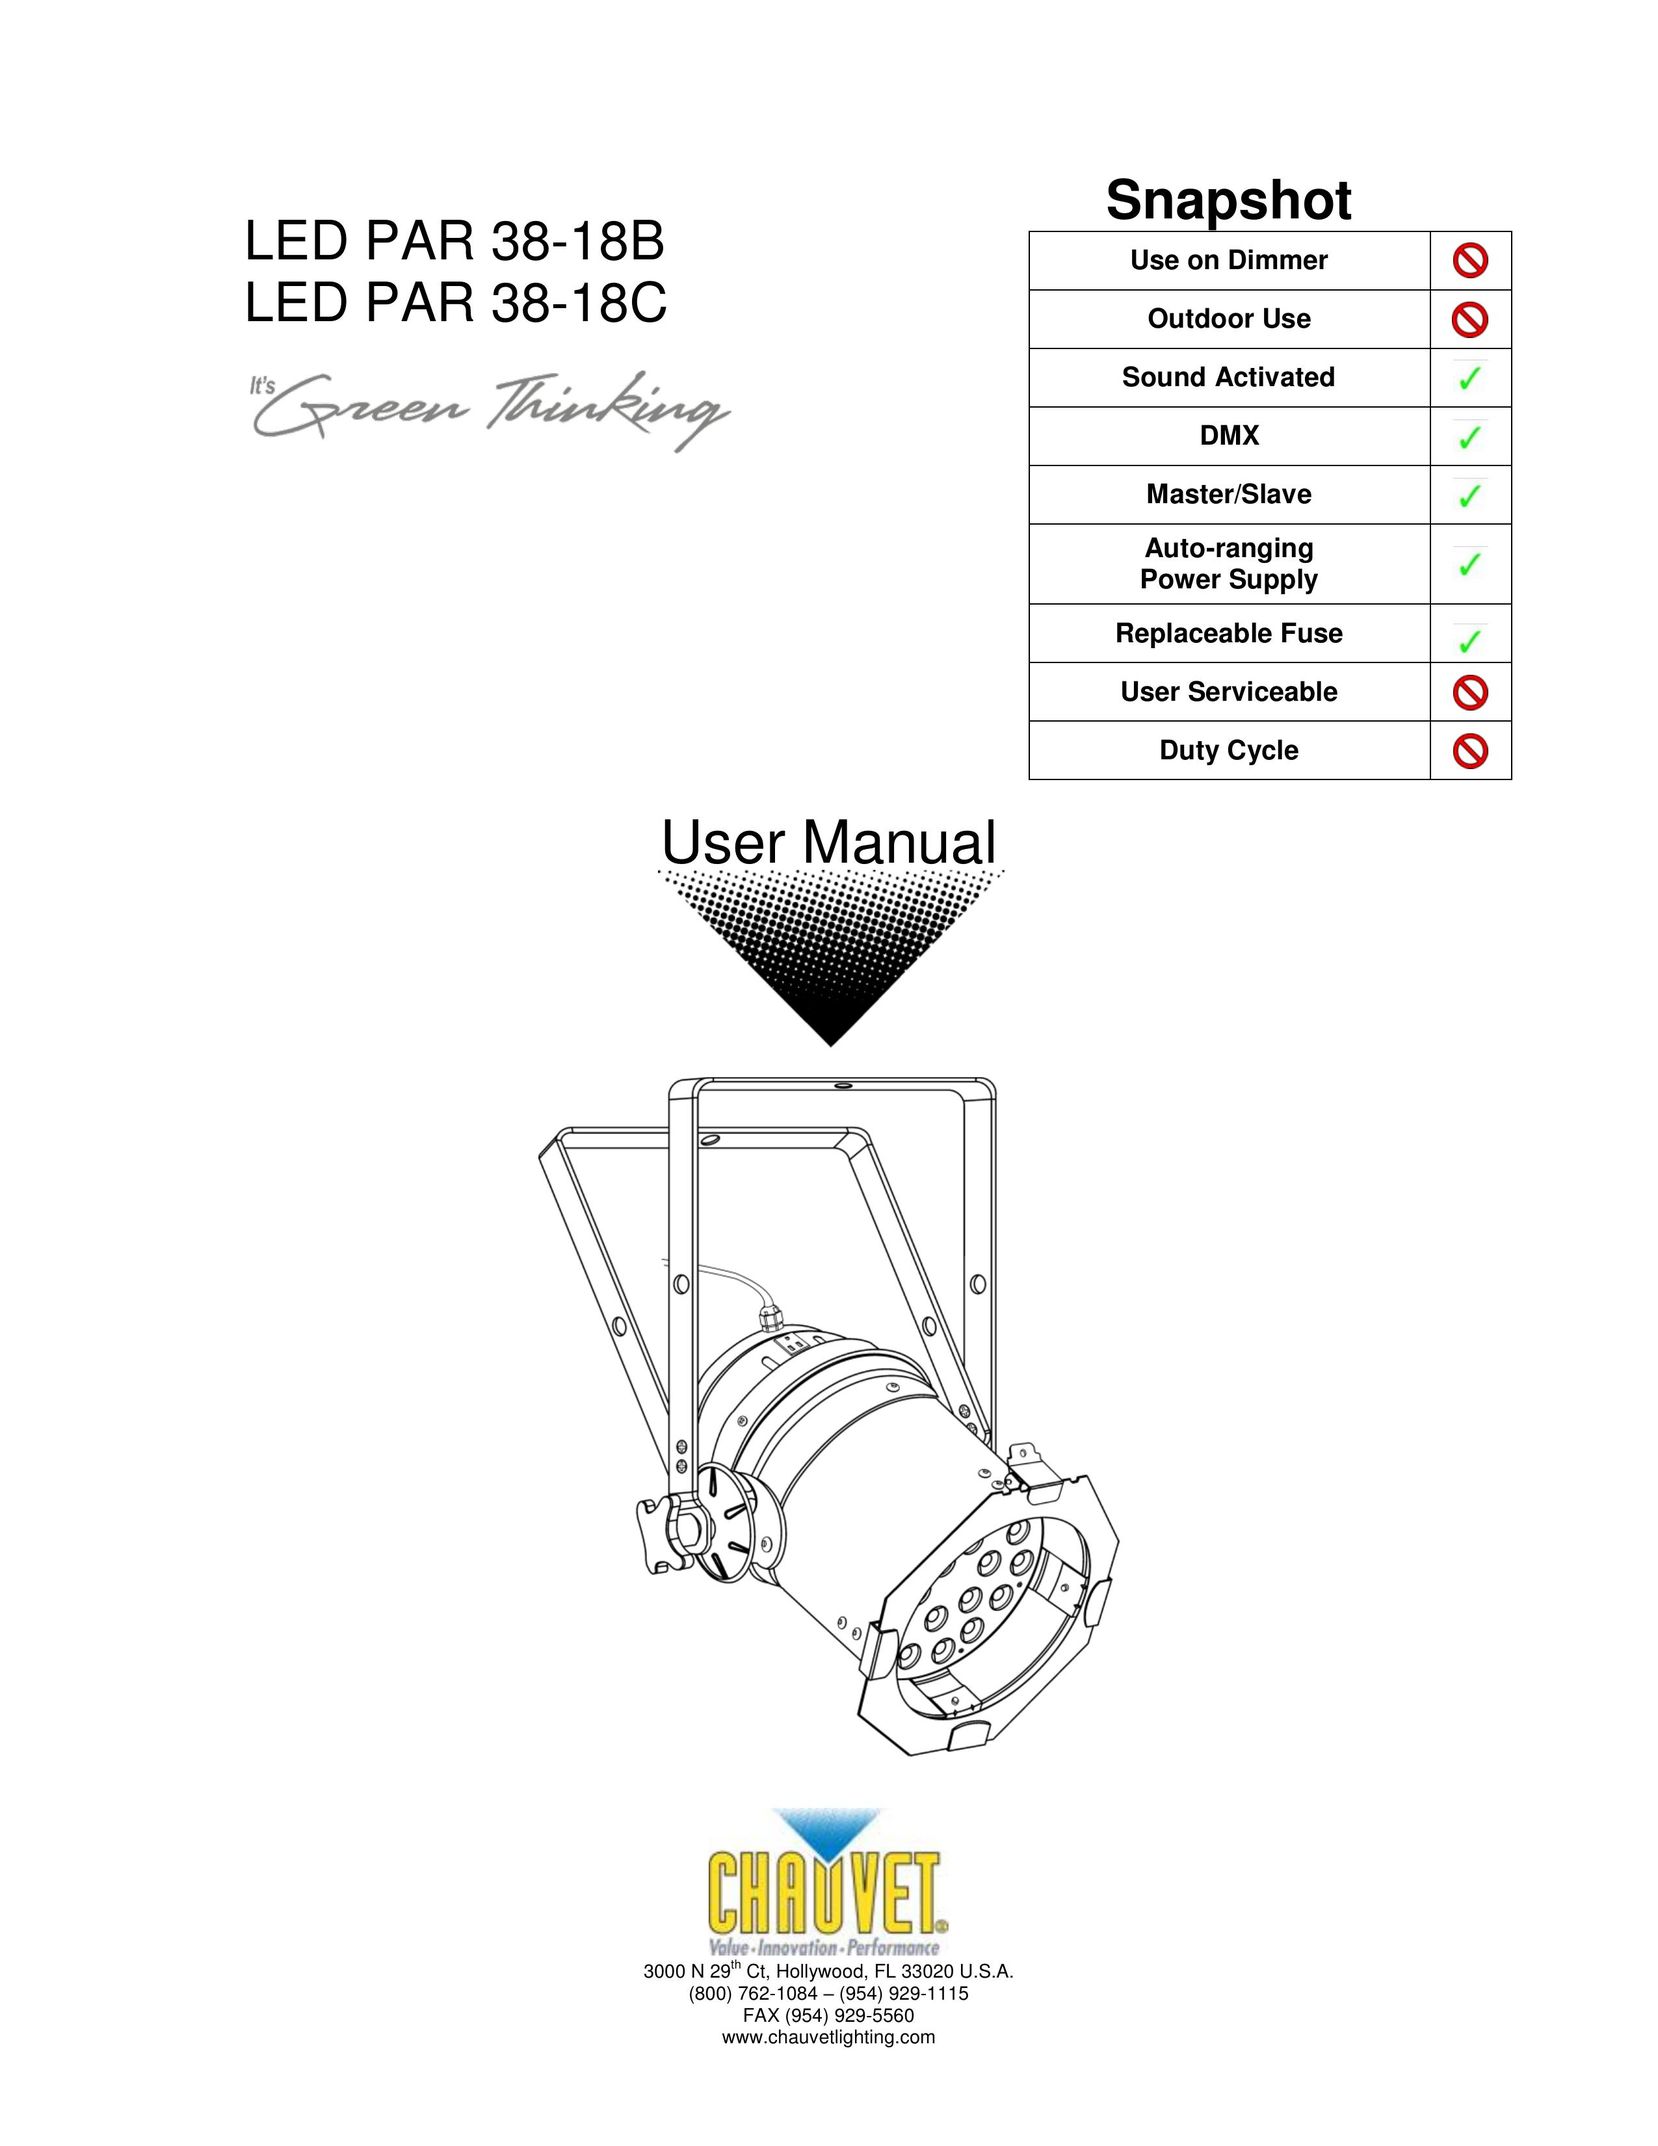 Chauvet LED PAR 38-18B Work Light User Manual